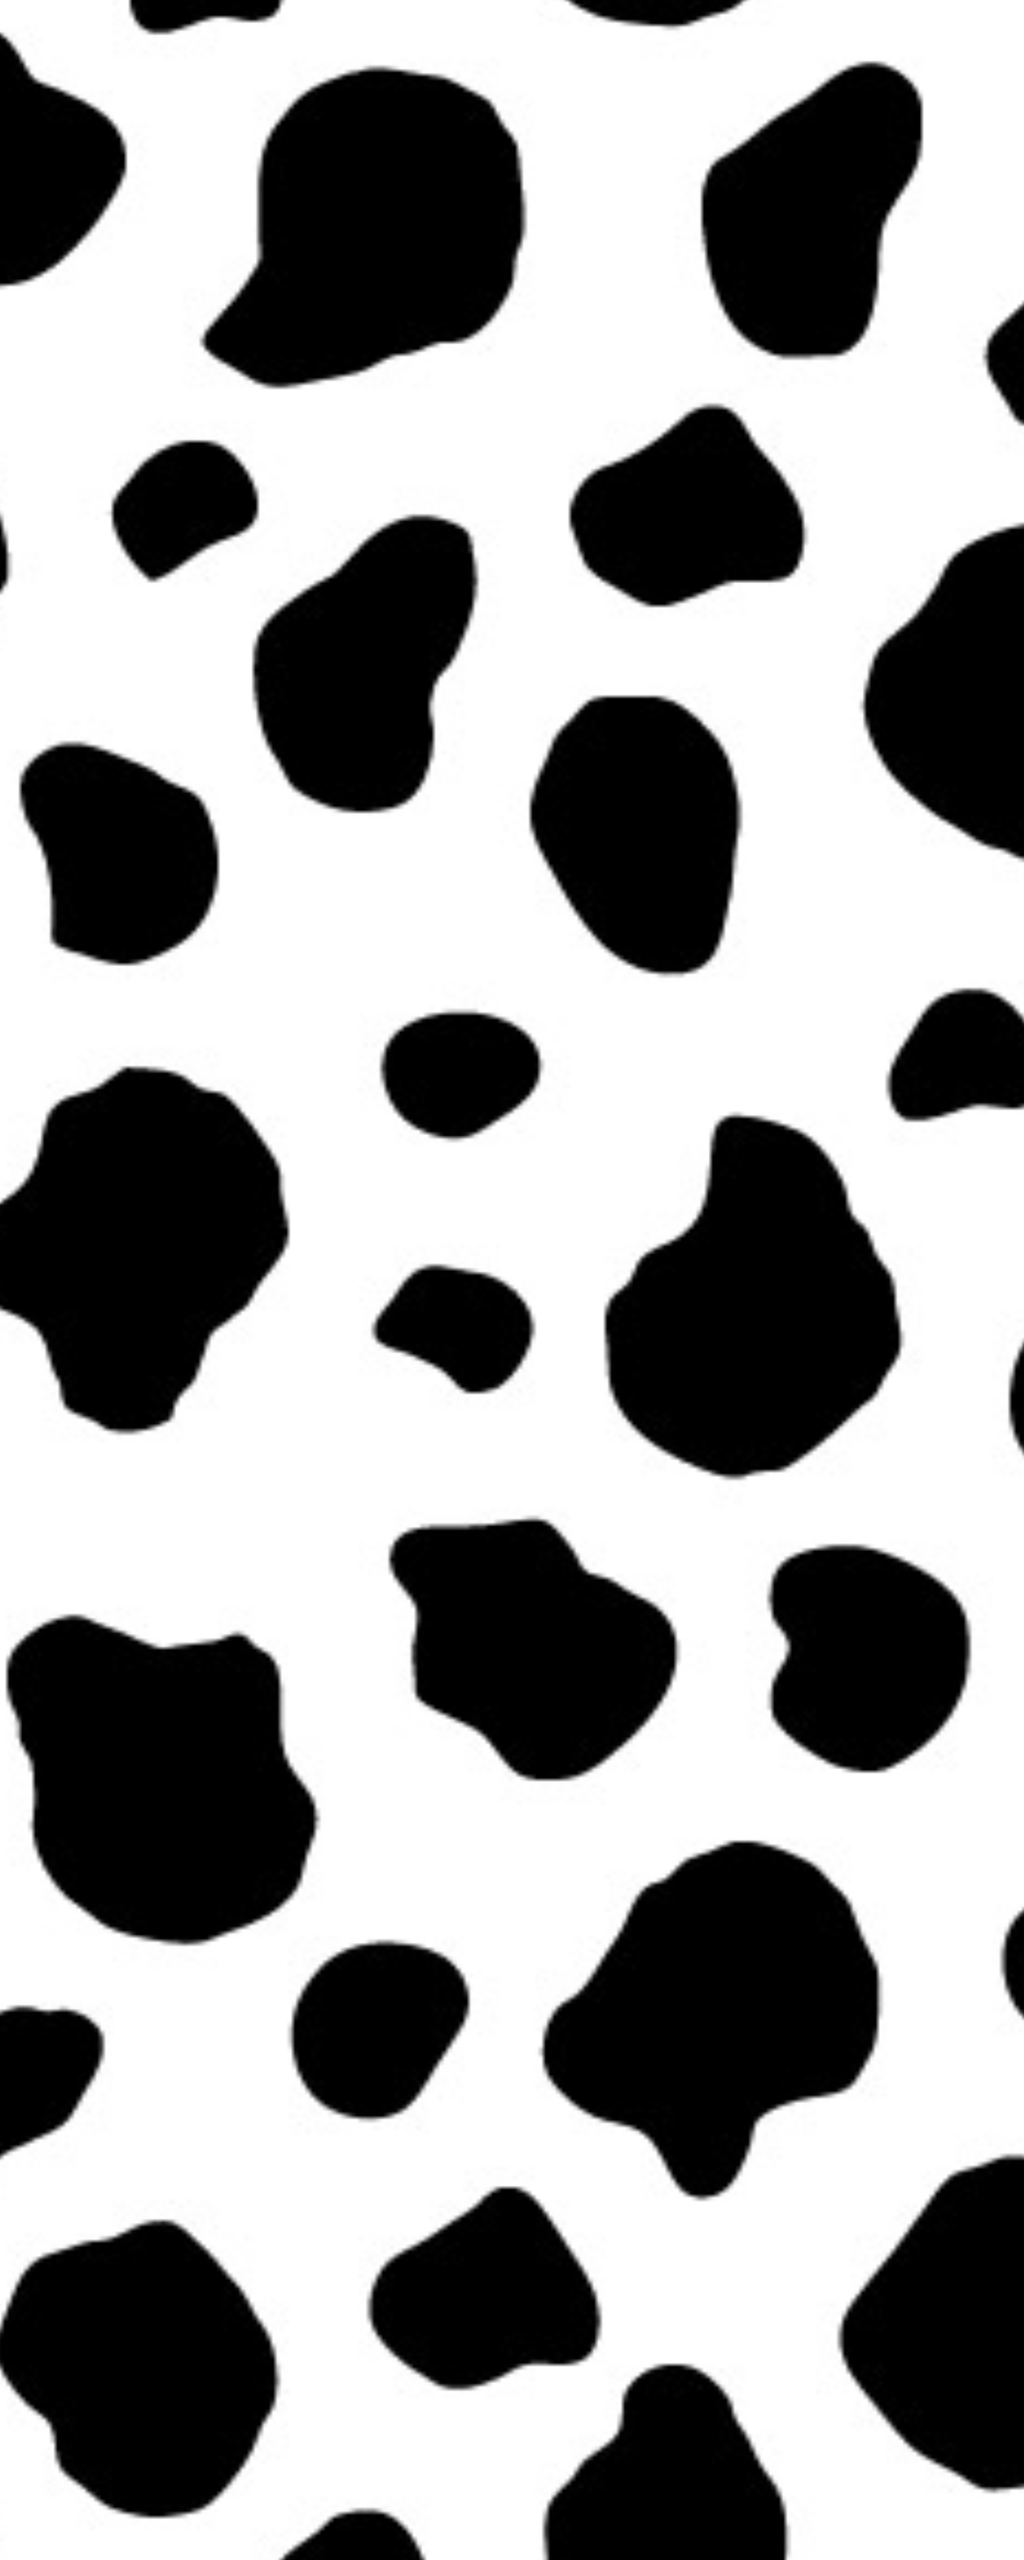 Custom Background 6 - Cow Print by Burning-Sapphire on DeviantArt